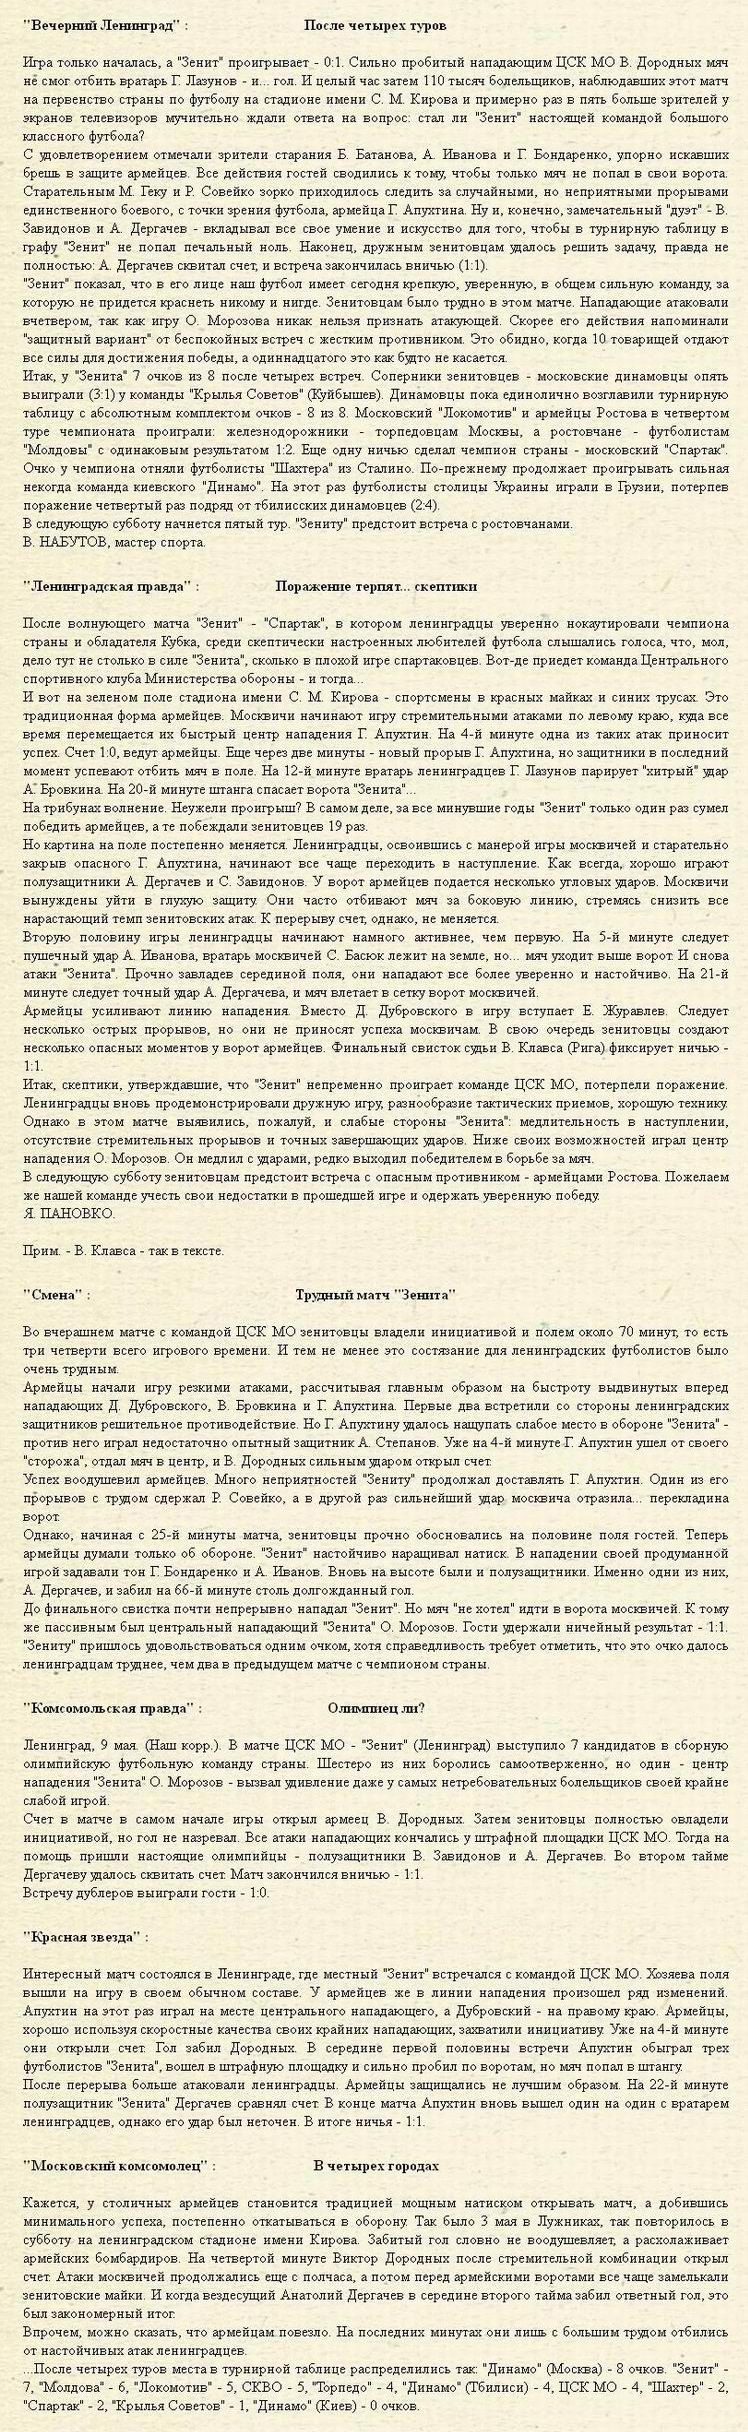 1959-05-09.Zenit-CSKMO.1